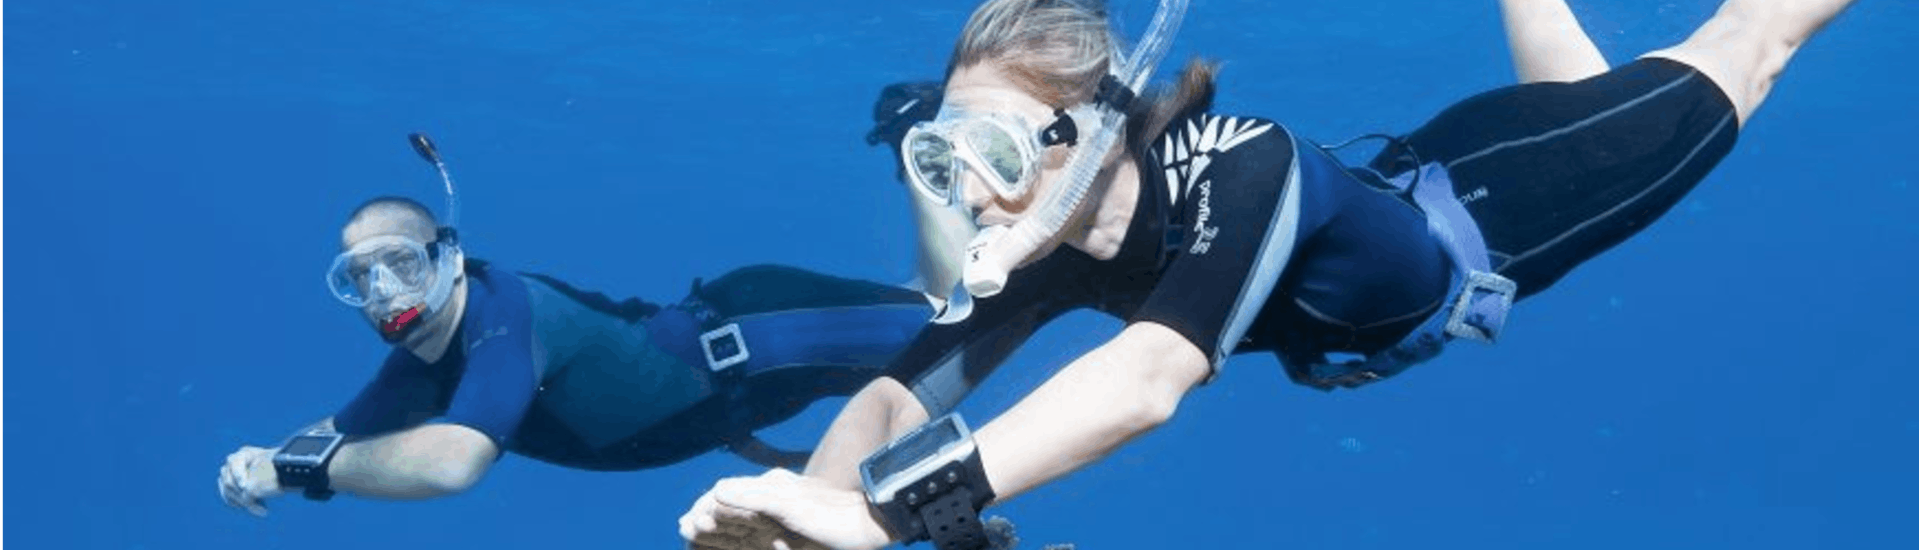 snorkeling-course-tarifa-leon-marina-tarifa-hero